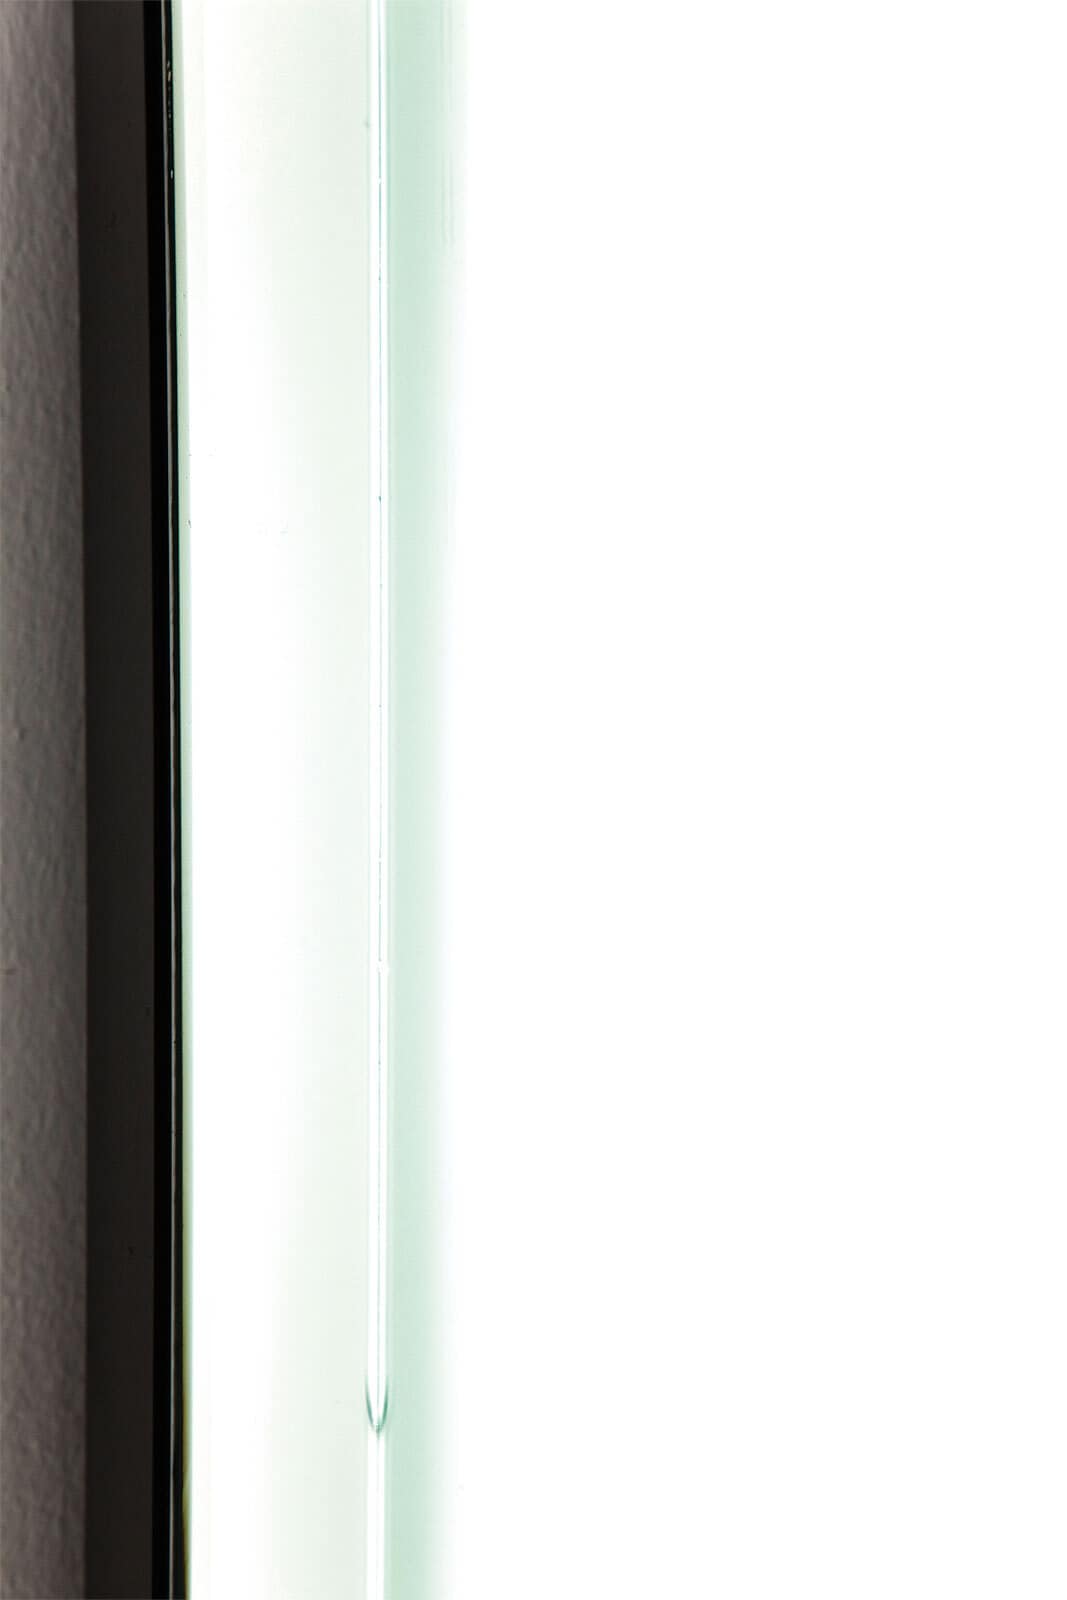 KARE DESIGN Spiegel BEAUTY 99 x 207 cm silberfarbig